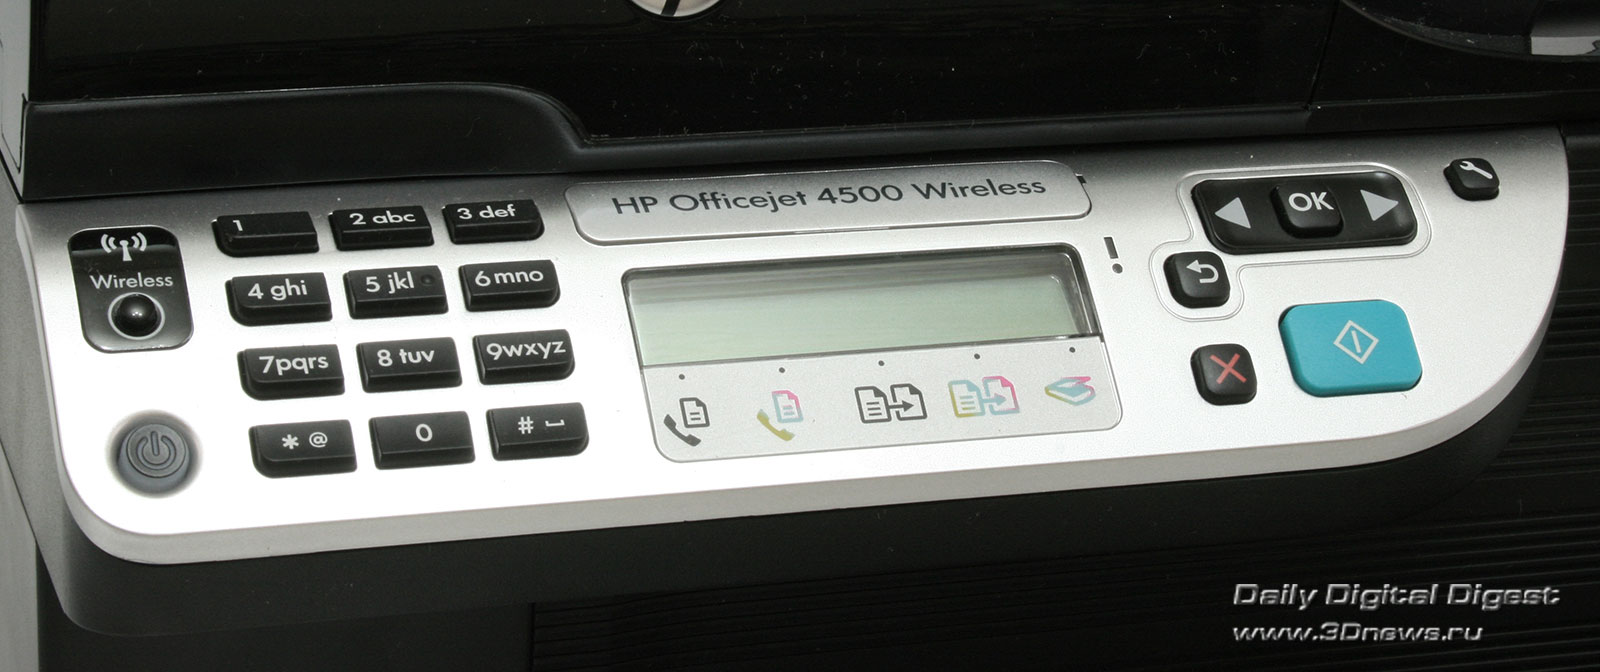 Download Printer Driver Hp Officejet 4500 G510n-z